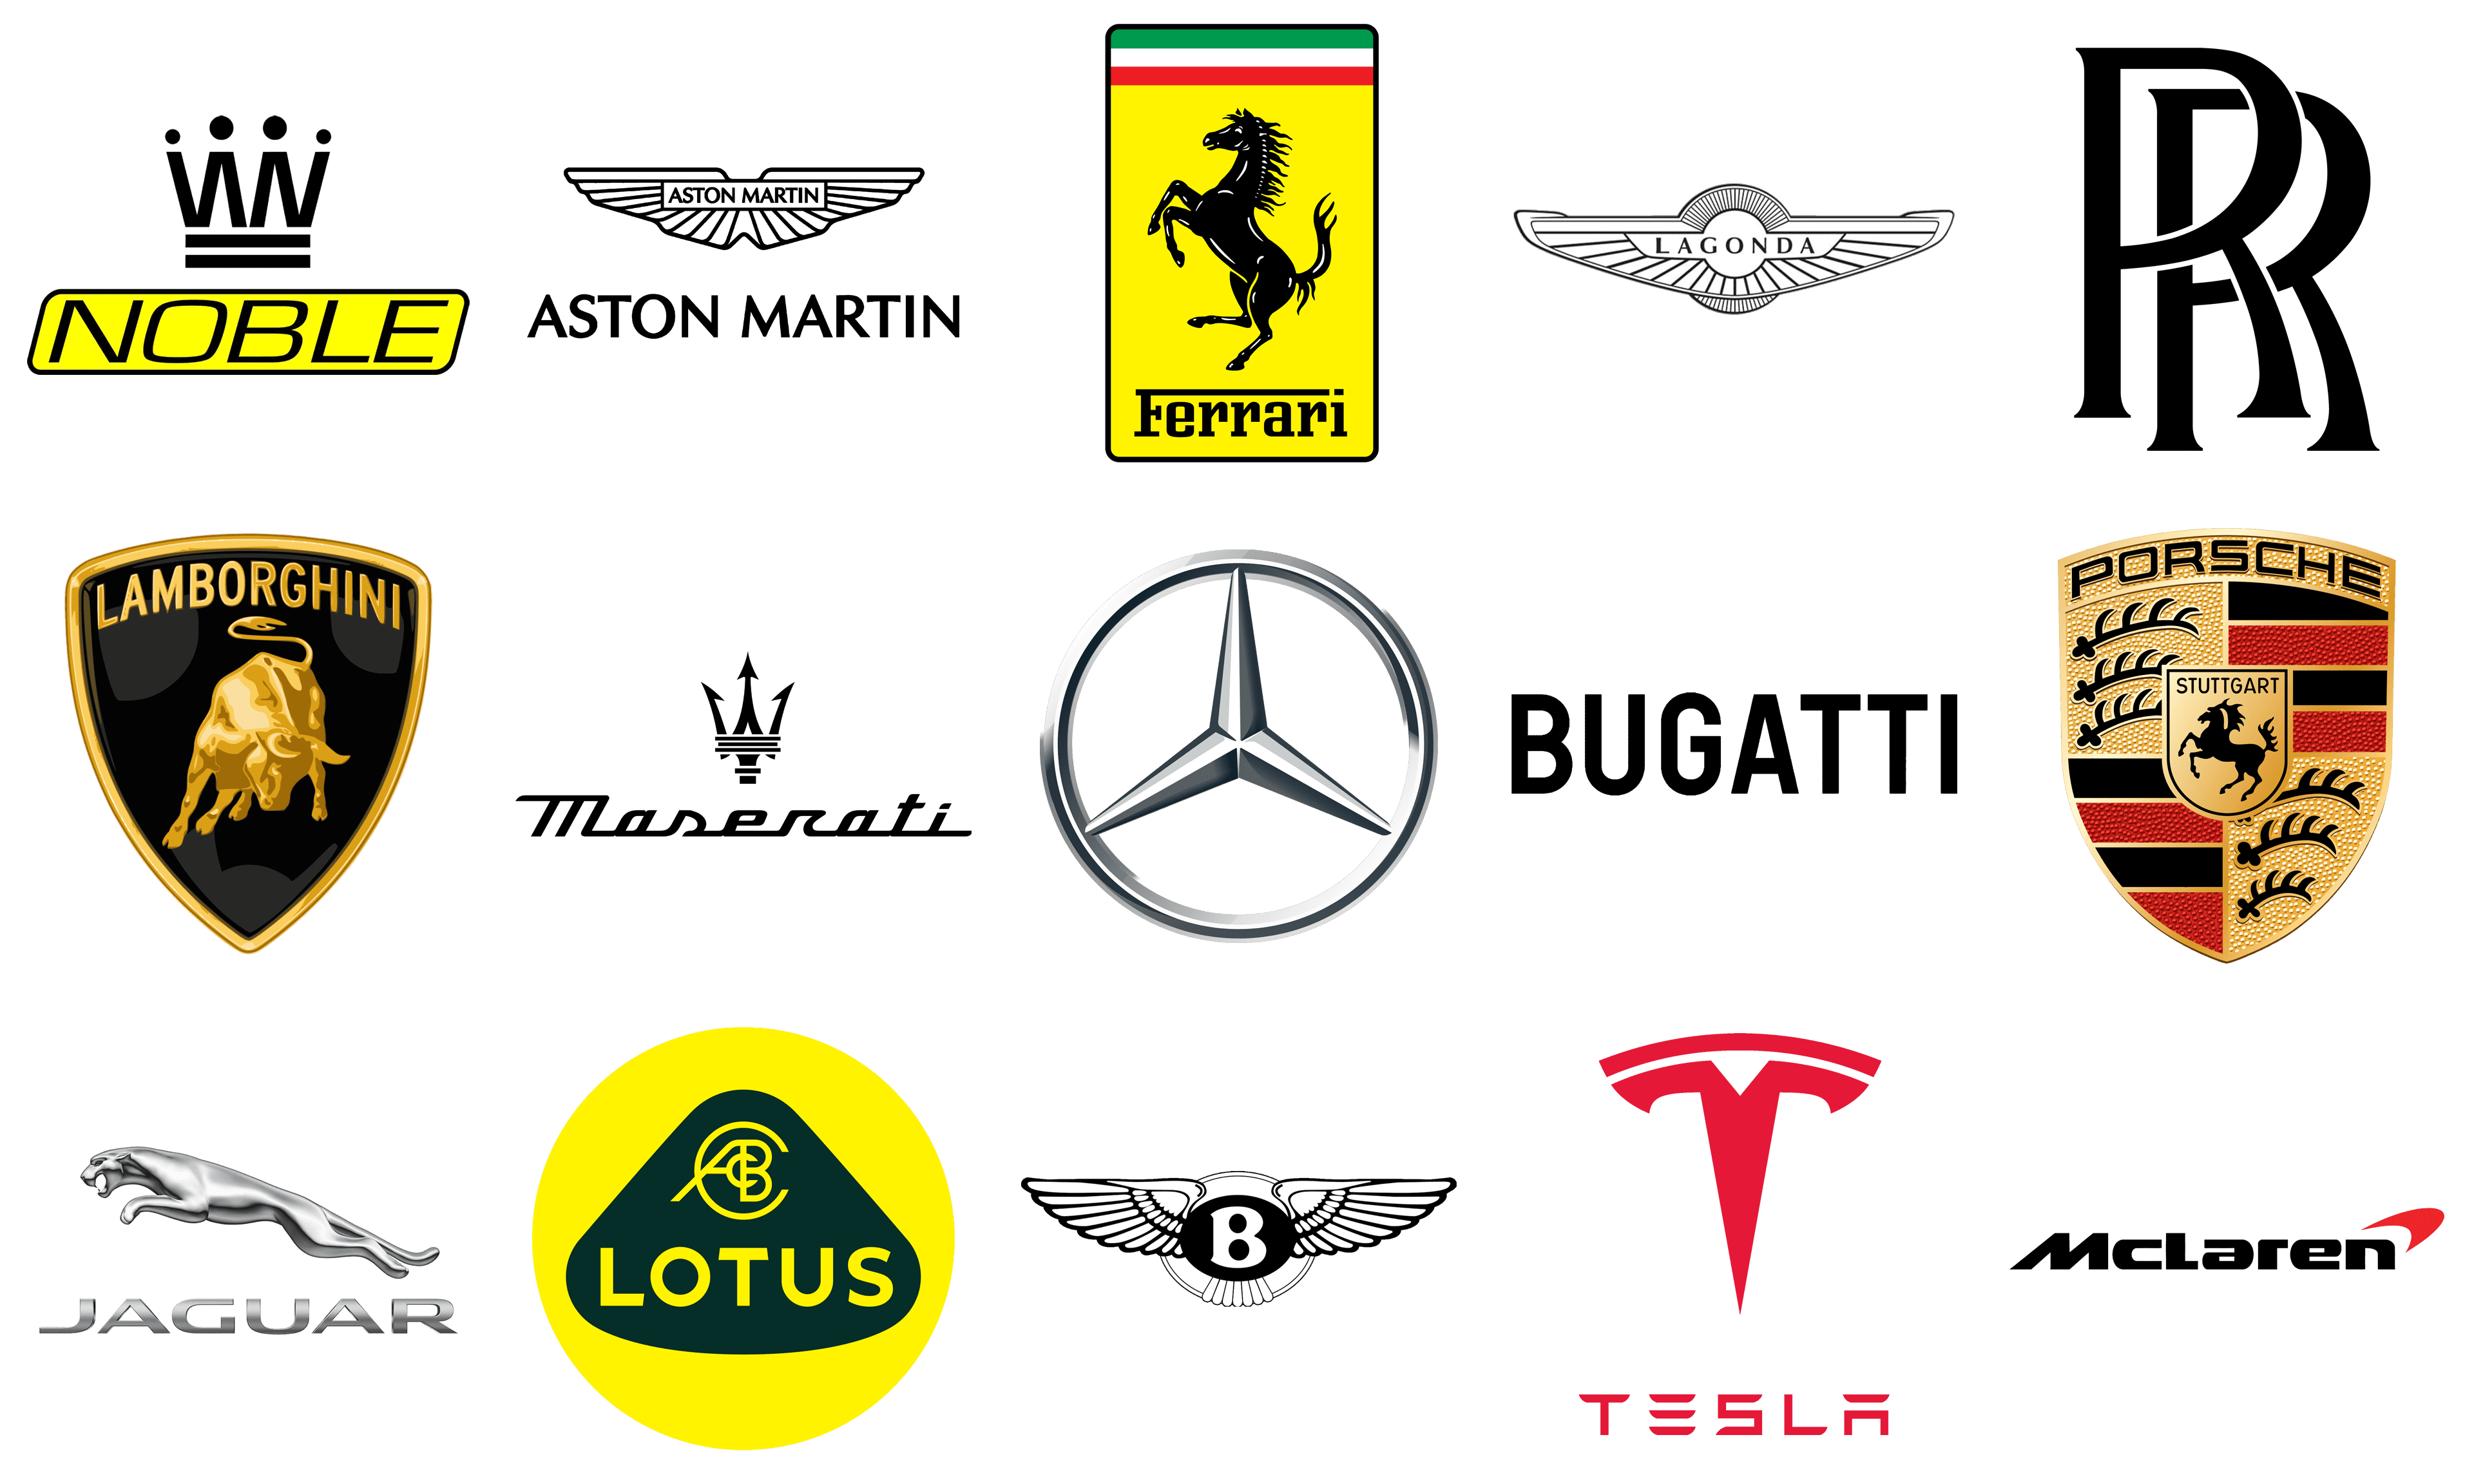 The major luxury groups